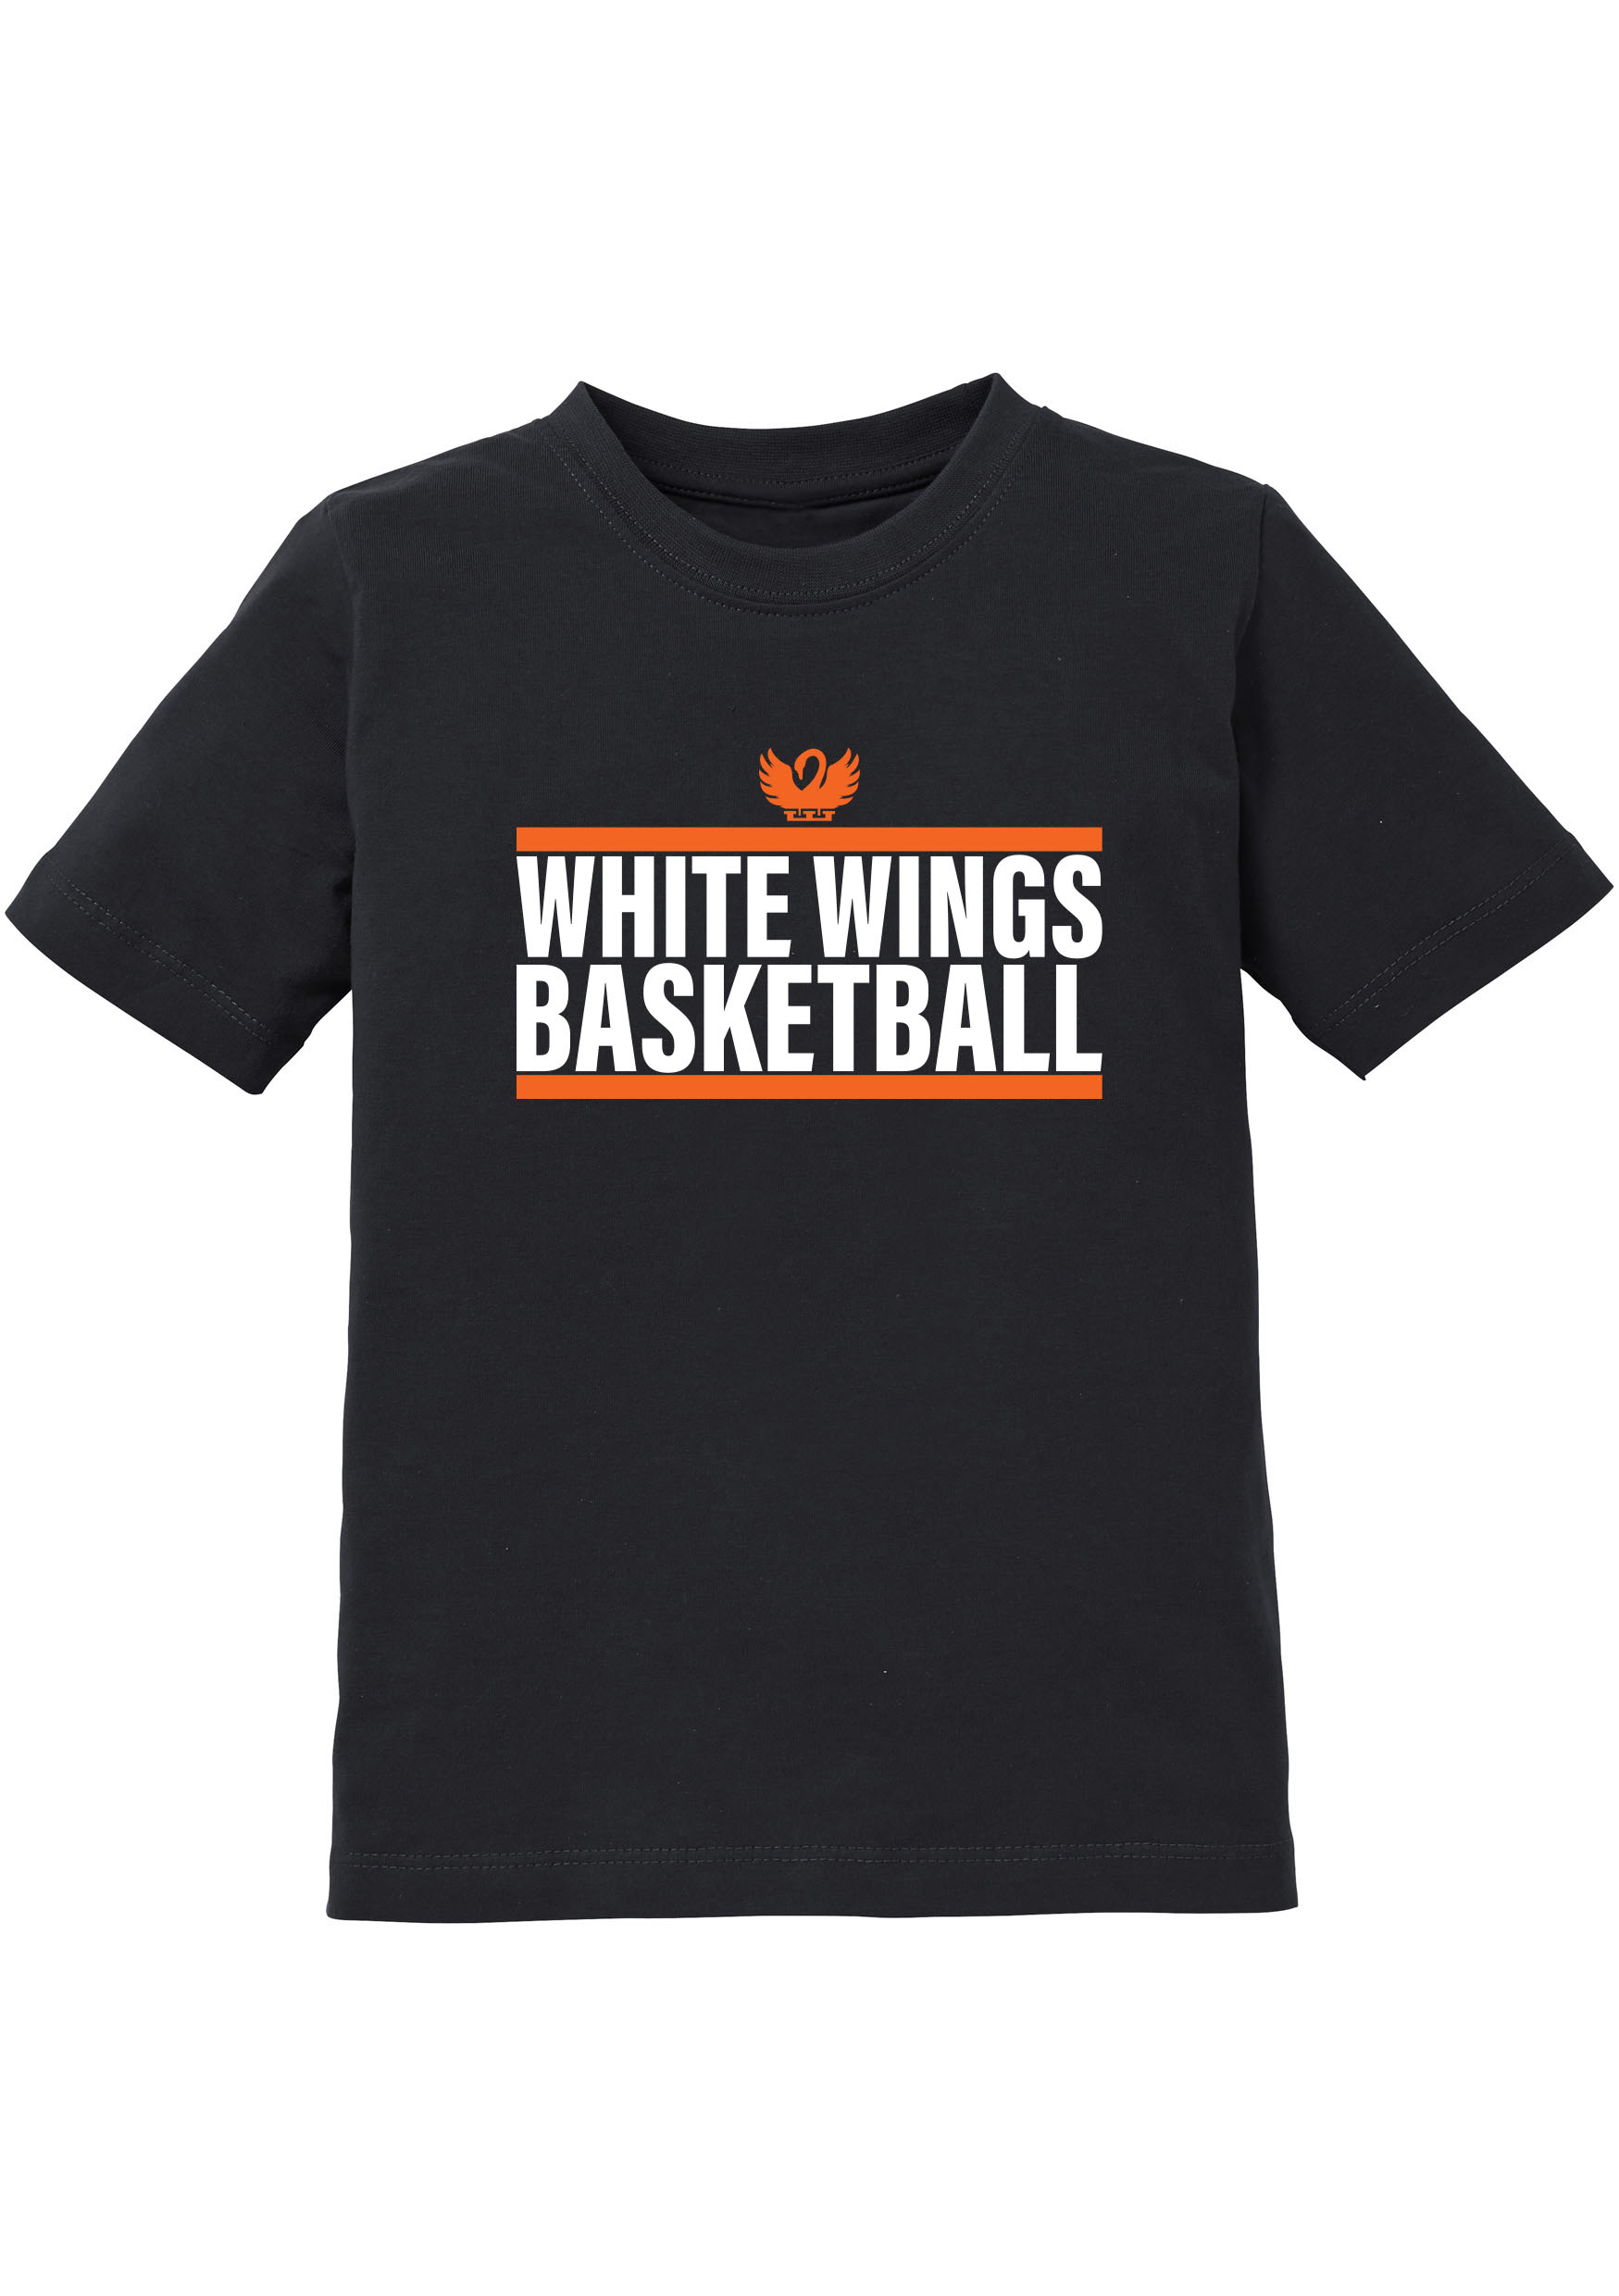 WhiteWings Basketball T-Shirt Kids